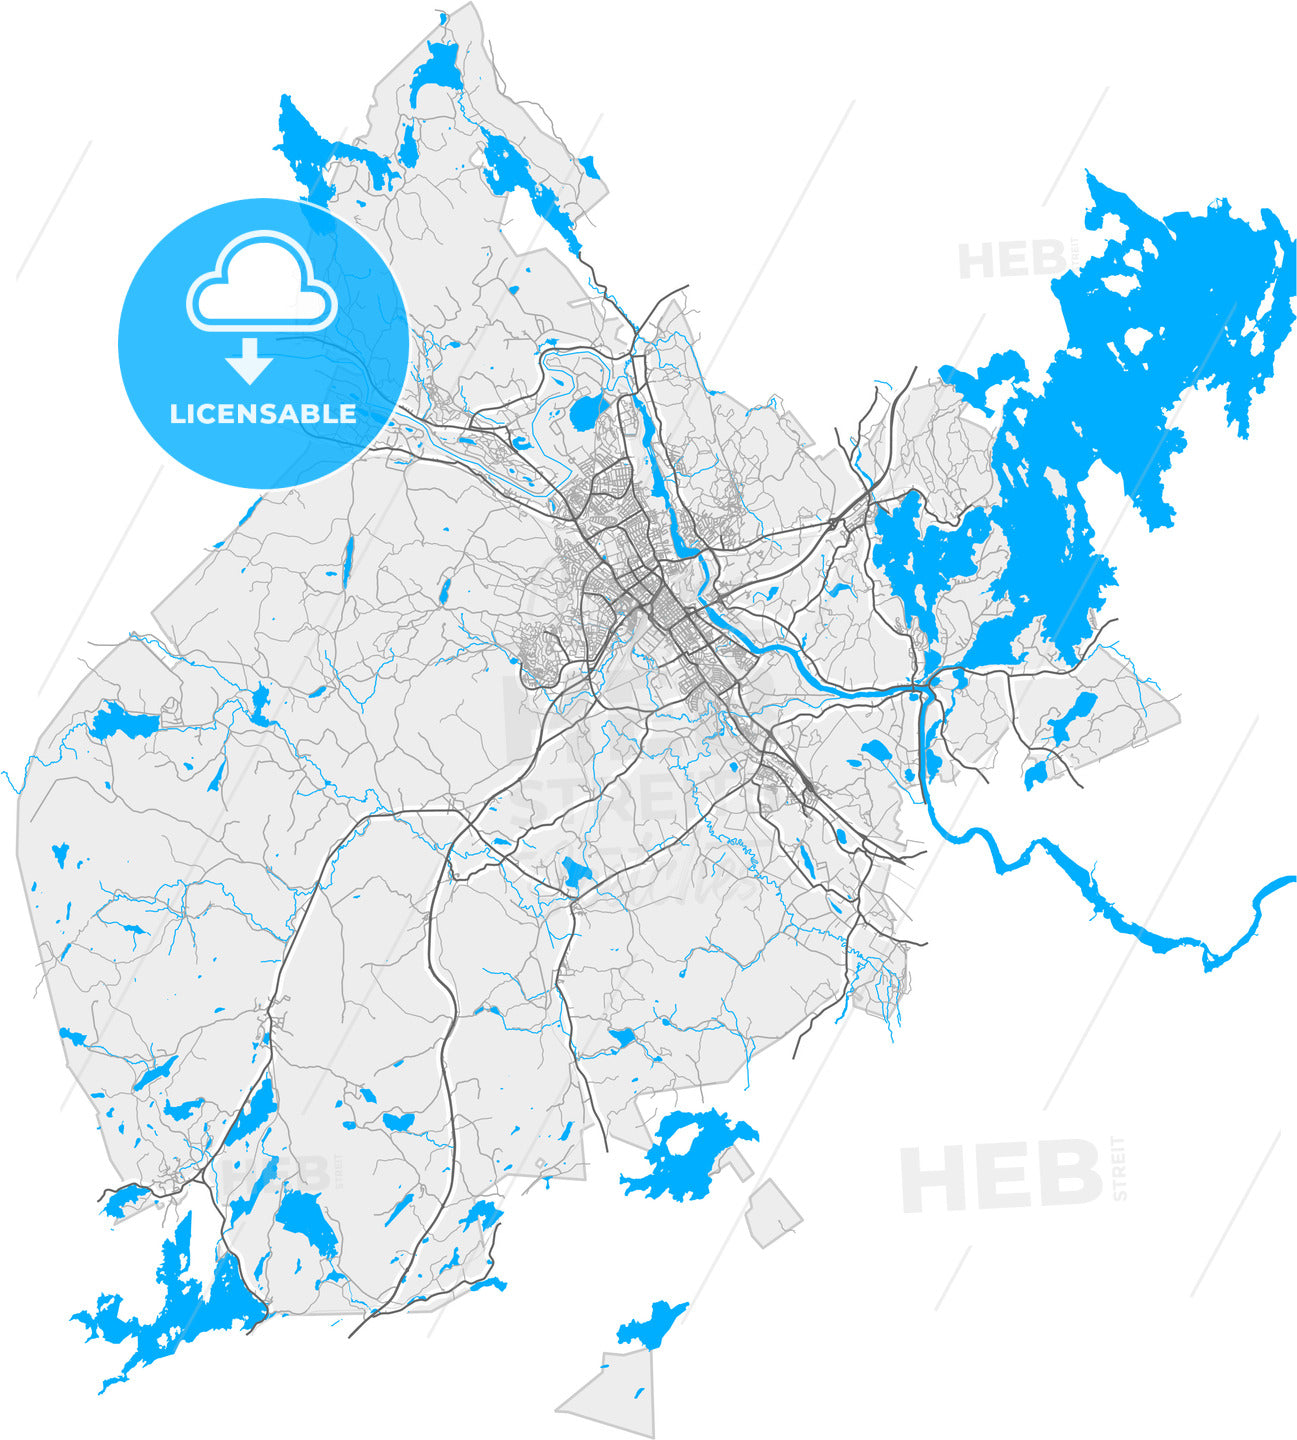 Borlänge, Sweden, high quality vector map